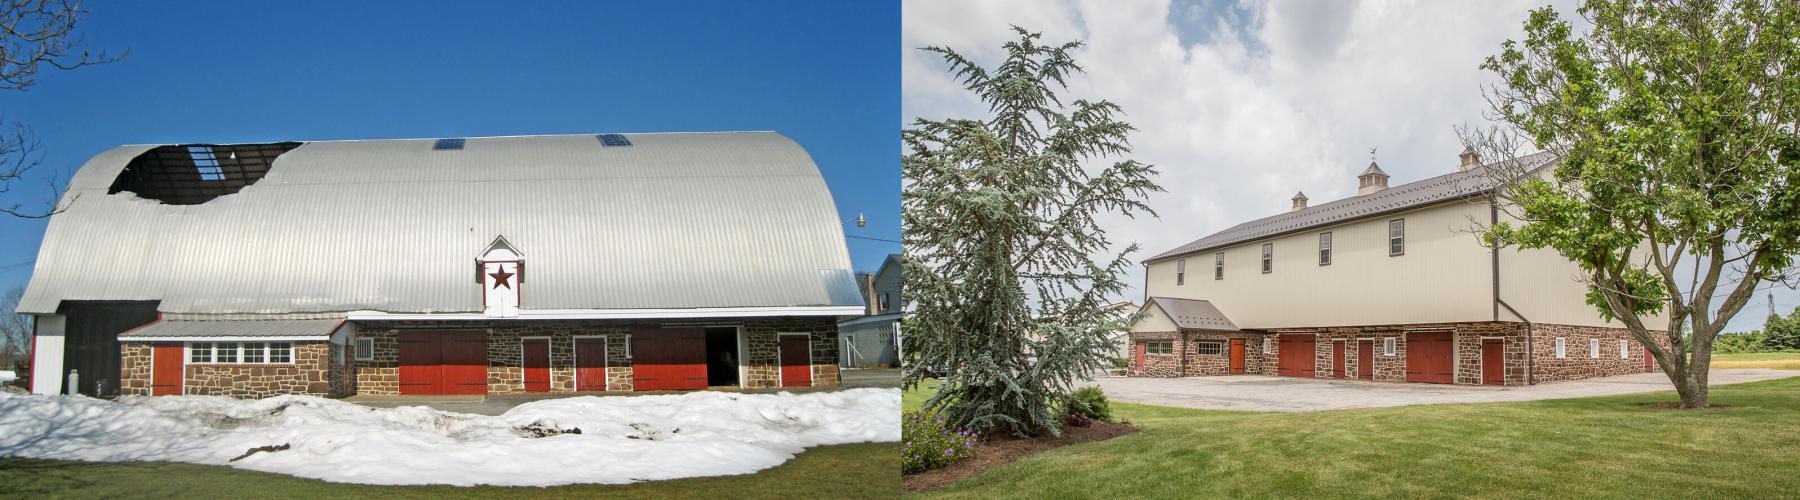 Bank barn renovations before / after